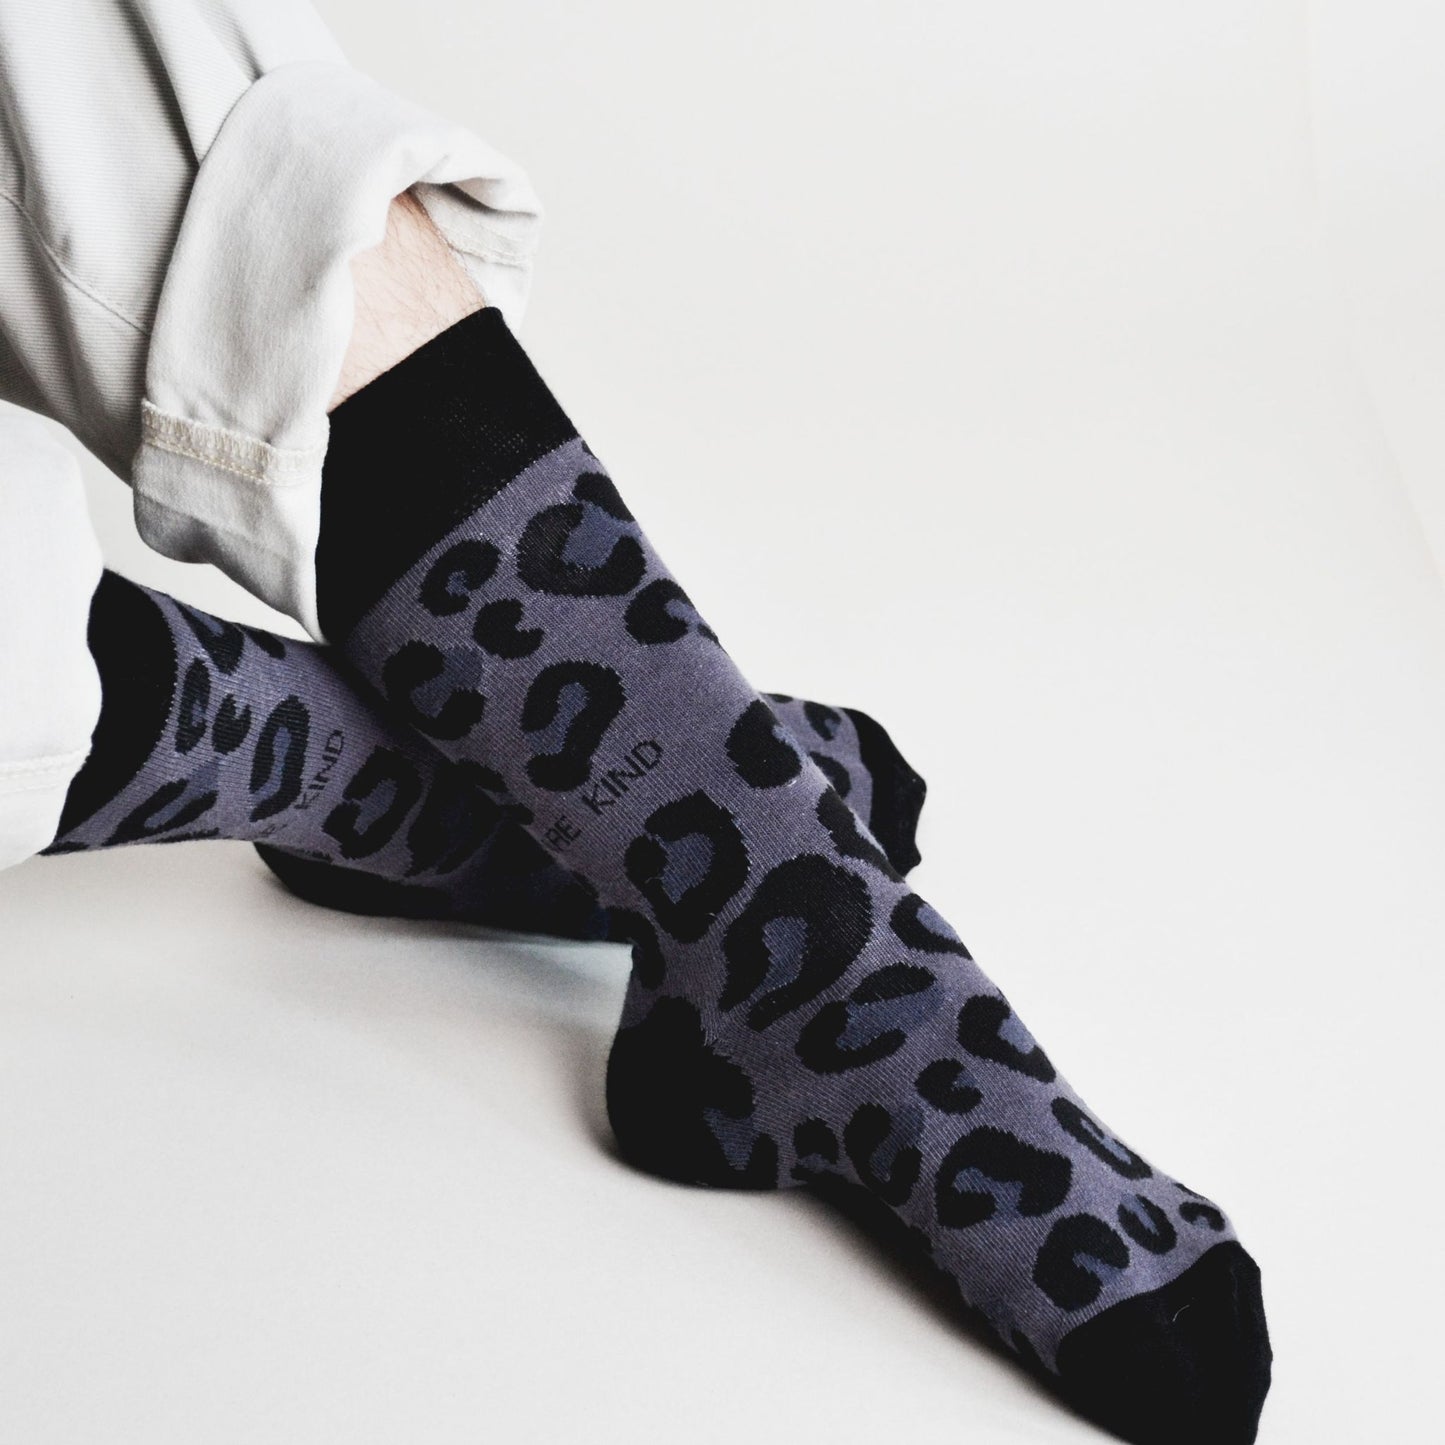 Panther Print Socks that Help Save Panthers - worn